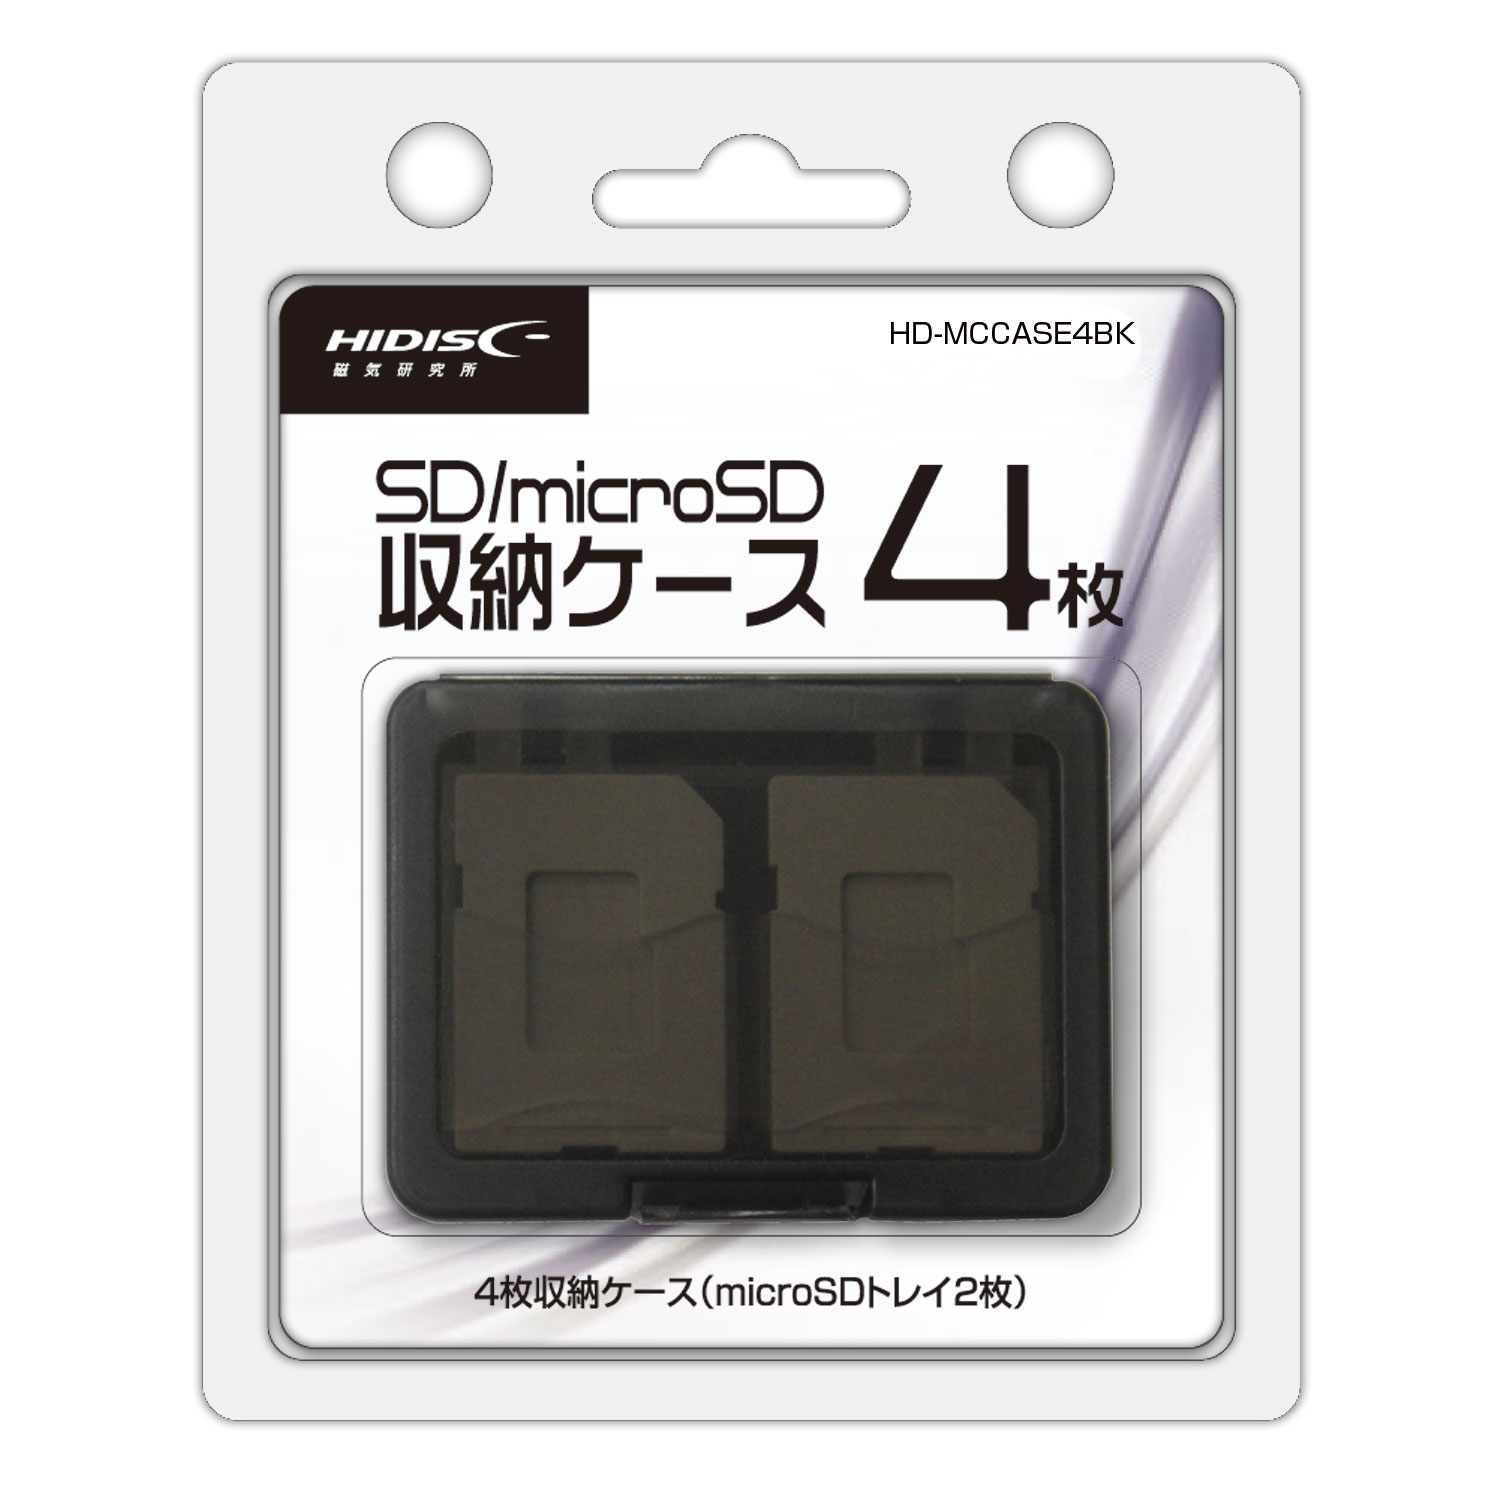 SD/microSD メモリーカード収納ケース 12枚収納用  HIDISC 株式会社磁気研究所